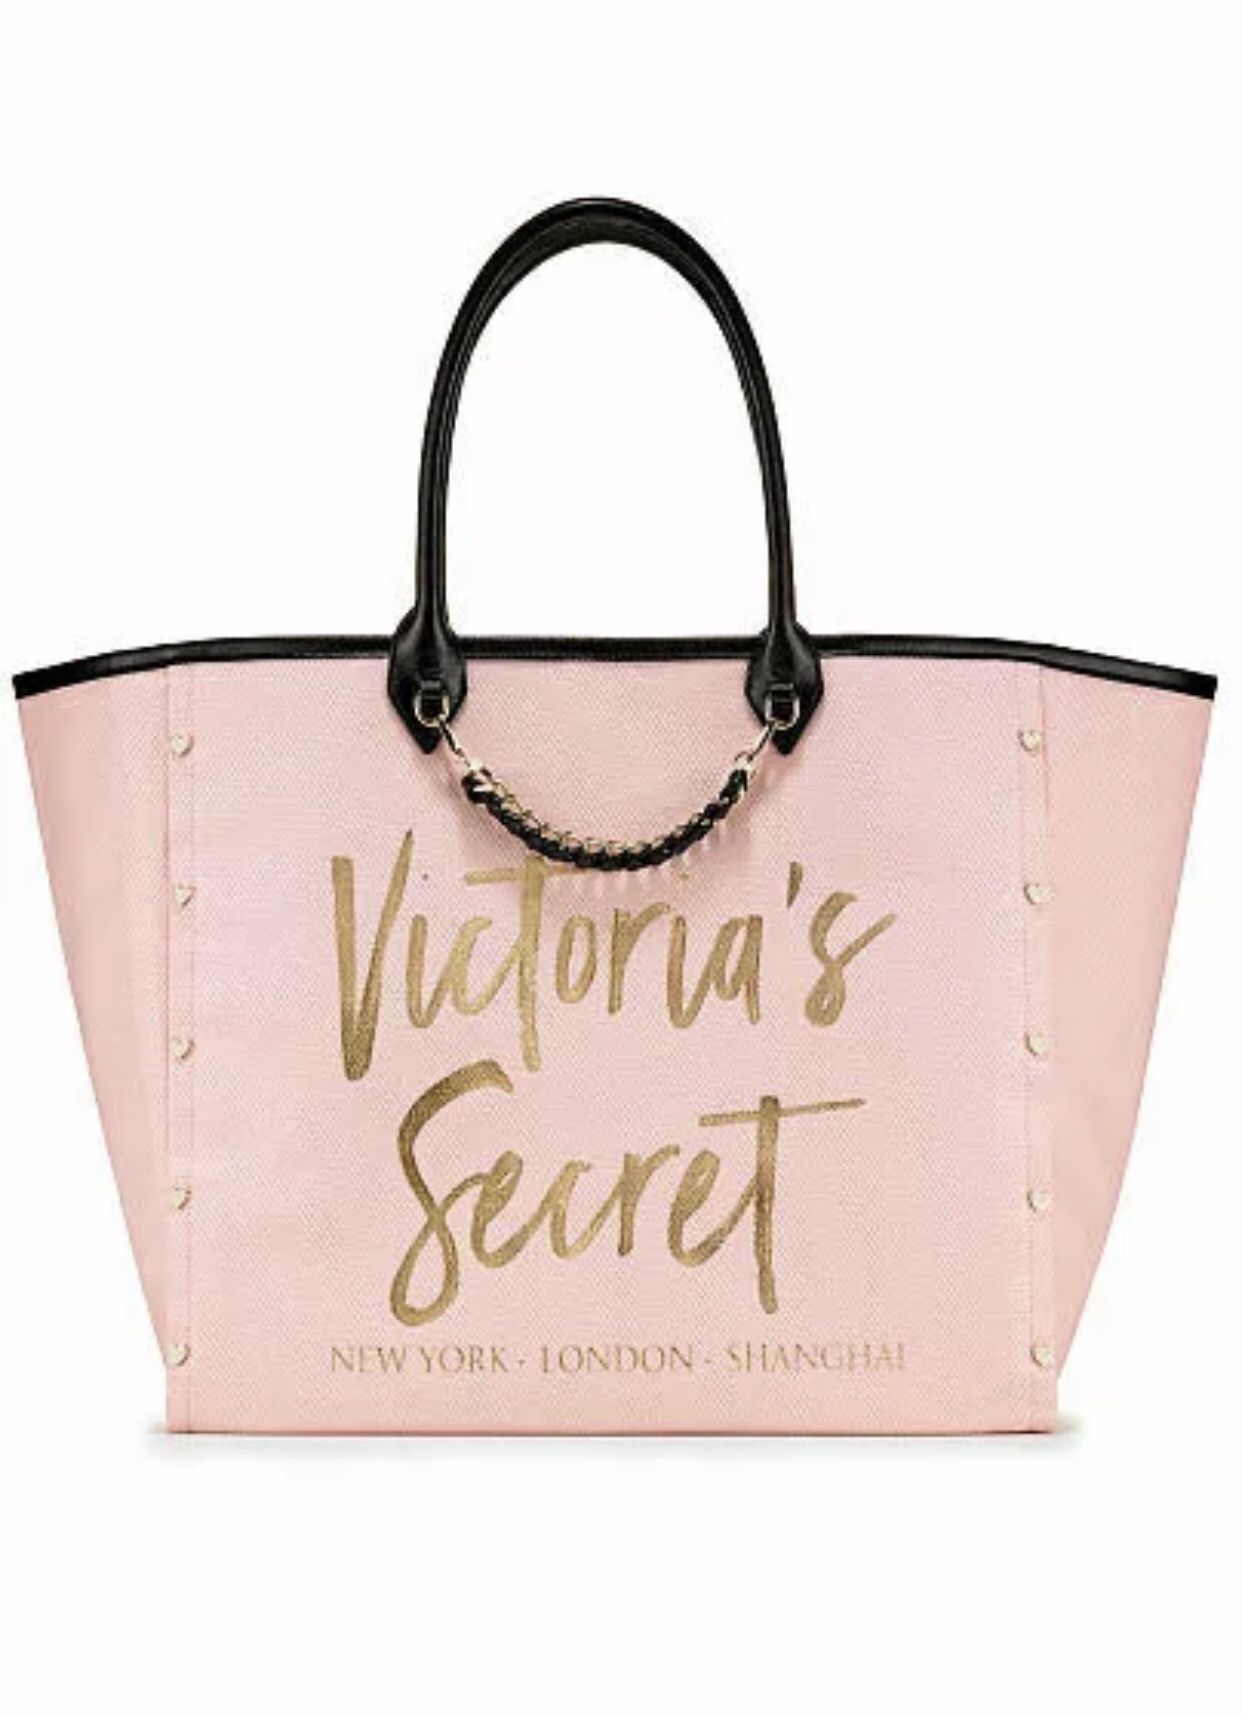 Victoria's Secret City Tote Bag New York London Shanghai Light Pink